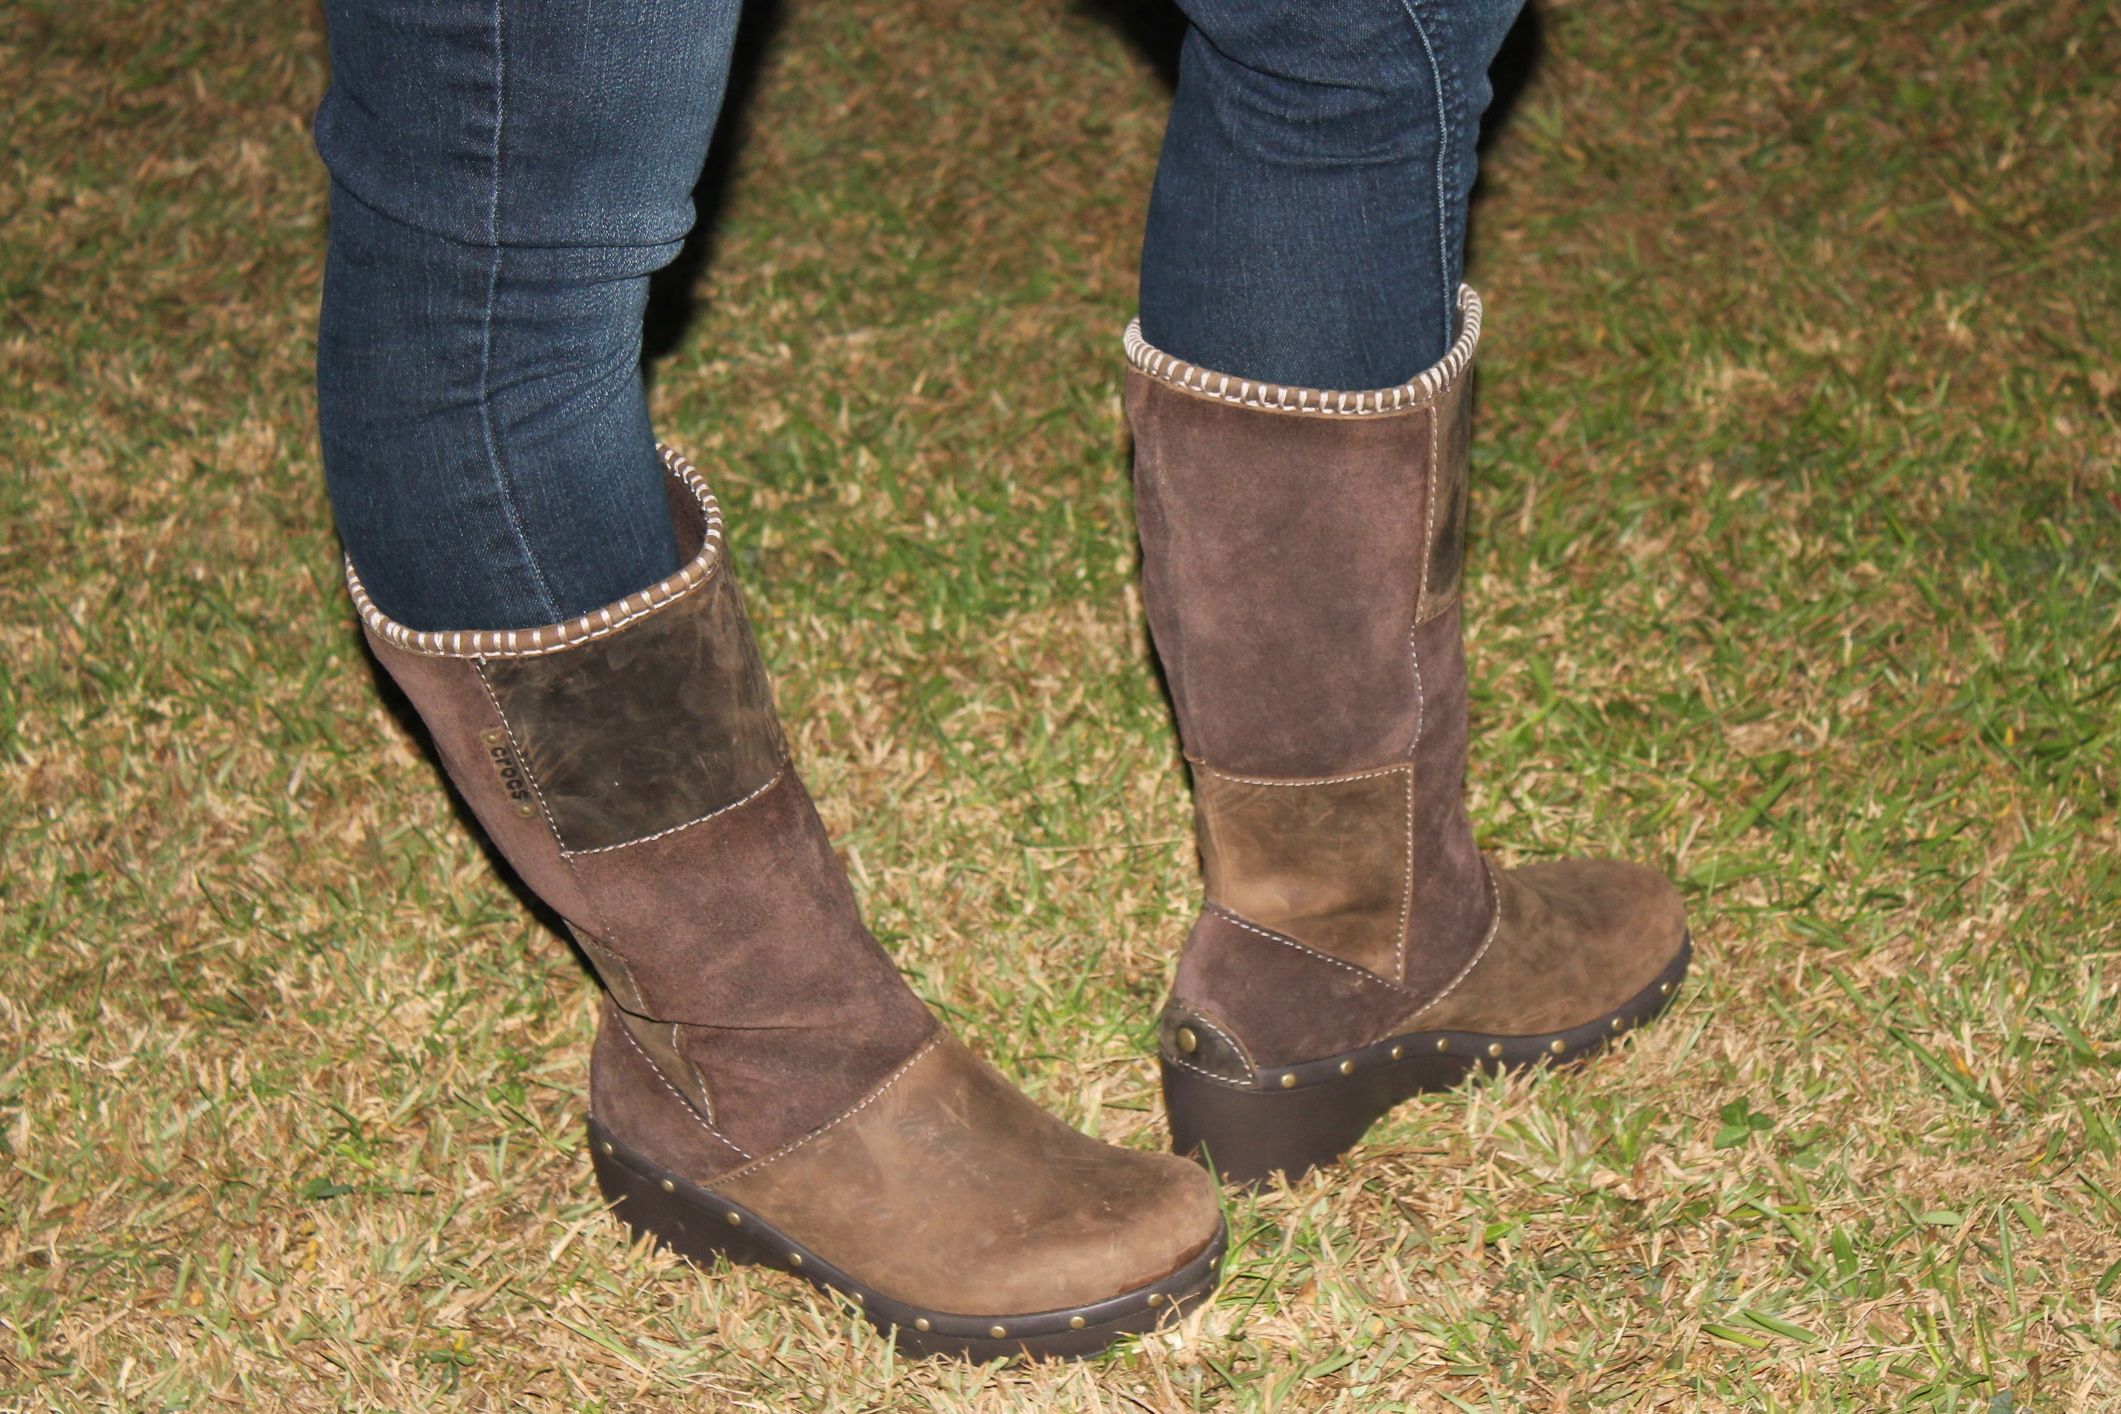 crocs women's boots